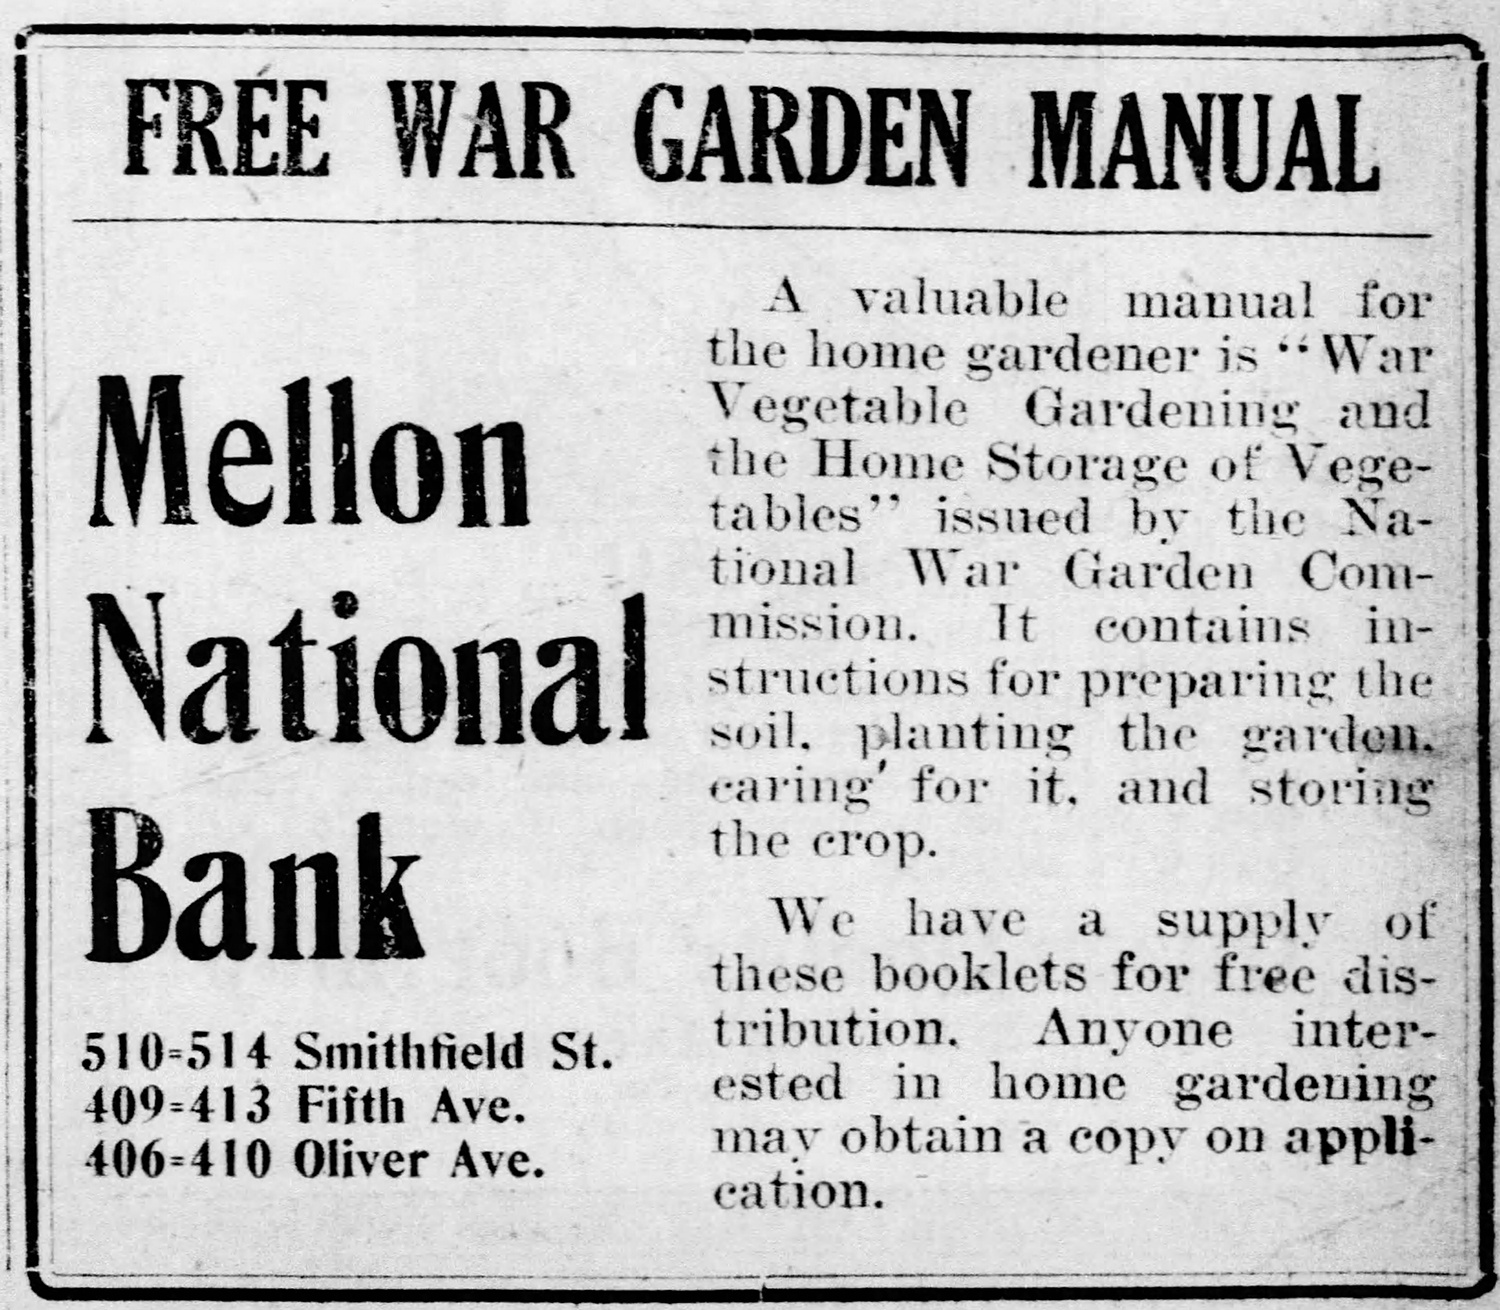 Advertisement for free war garden manuals offered by Mellon National Bank, 1918.